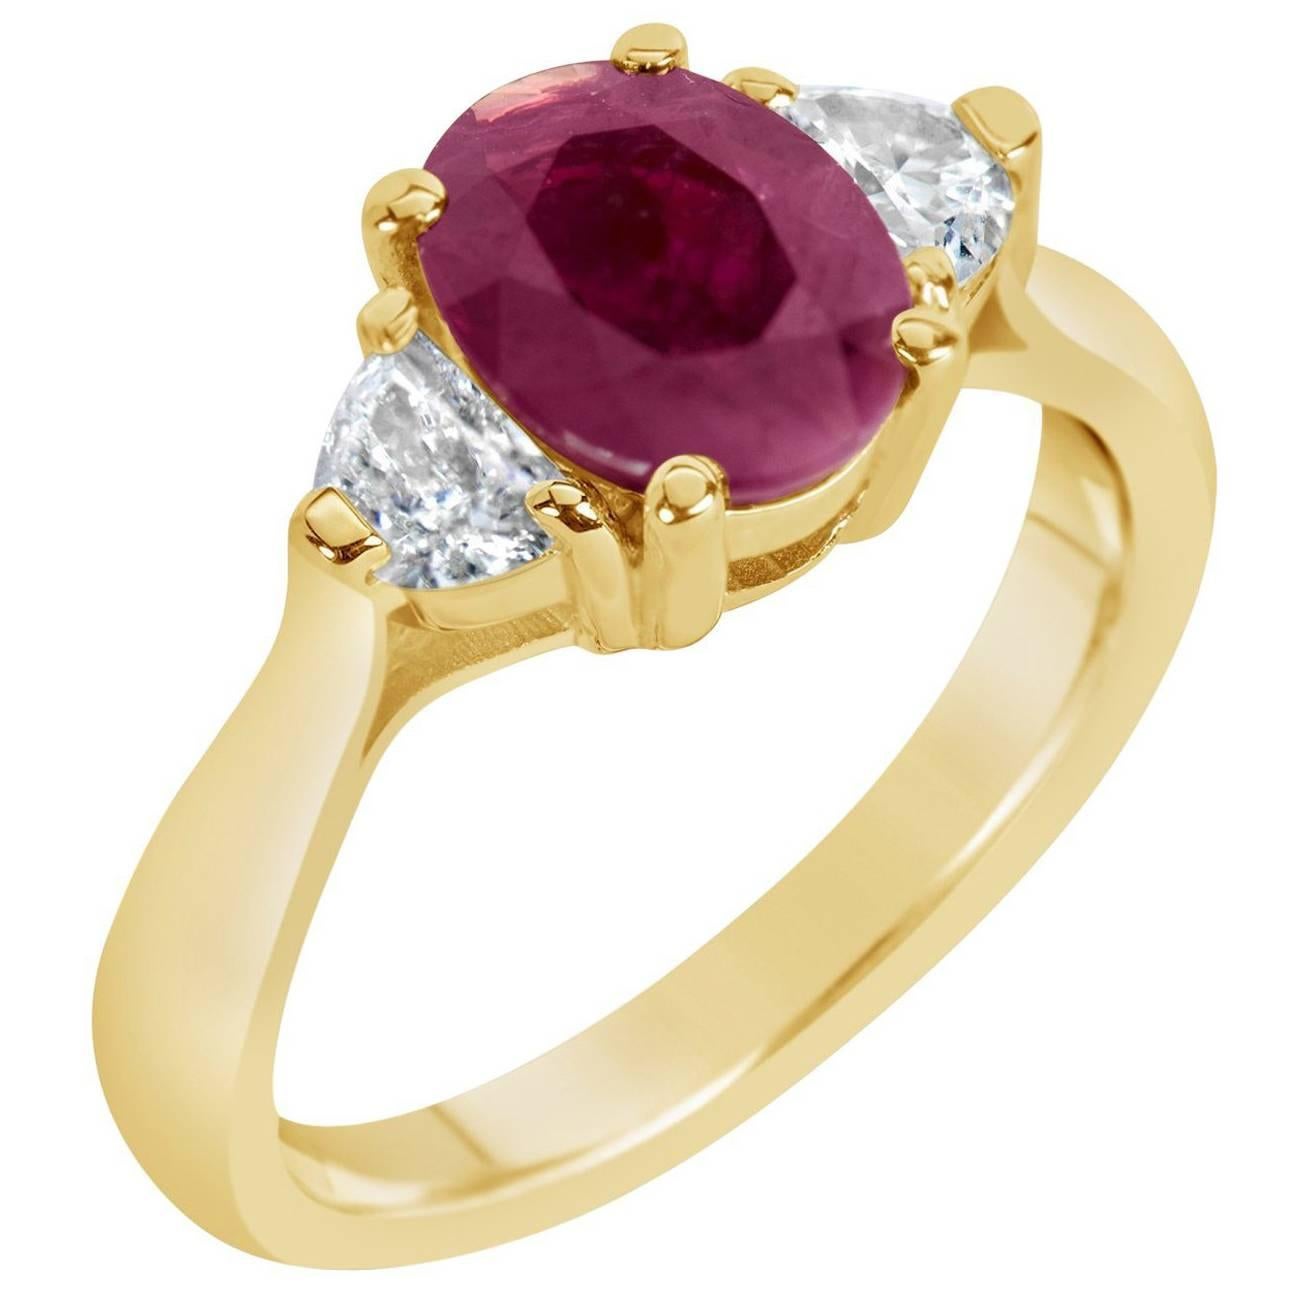 Oval Ruby with Half Moon Diamonds Three-Stone Ring